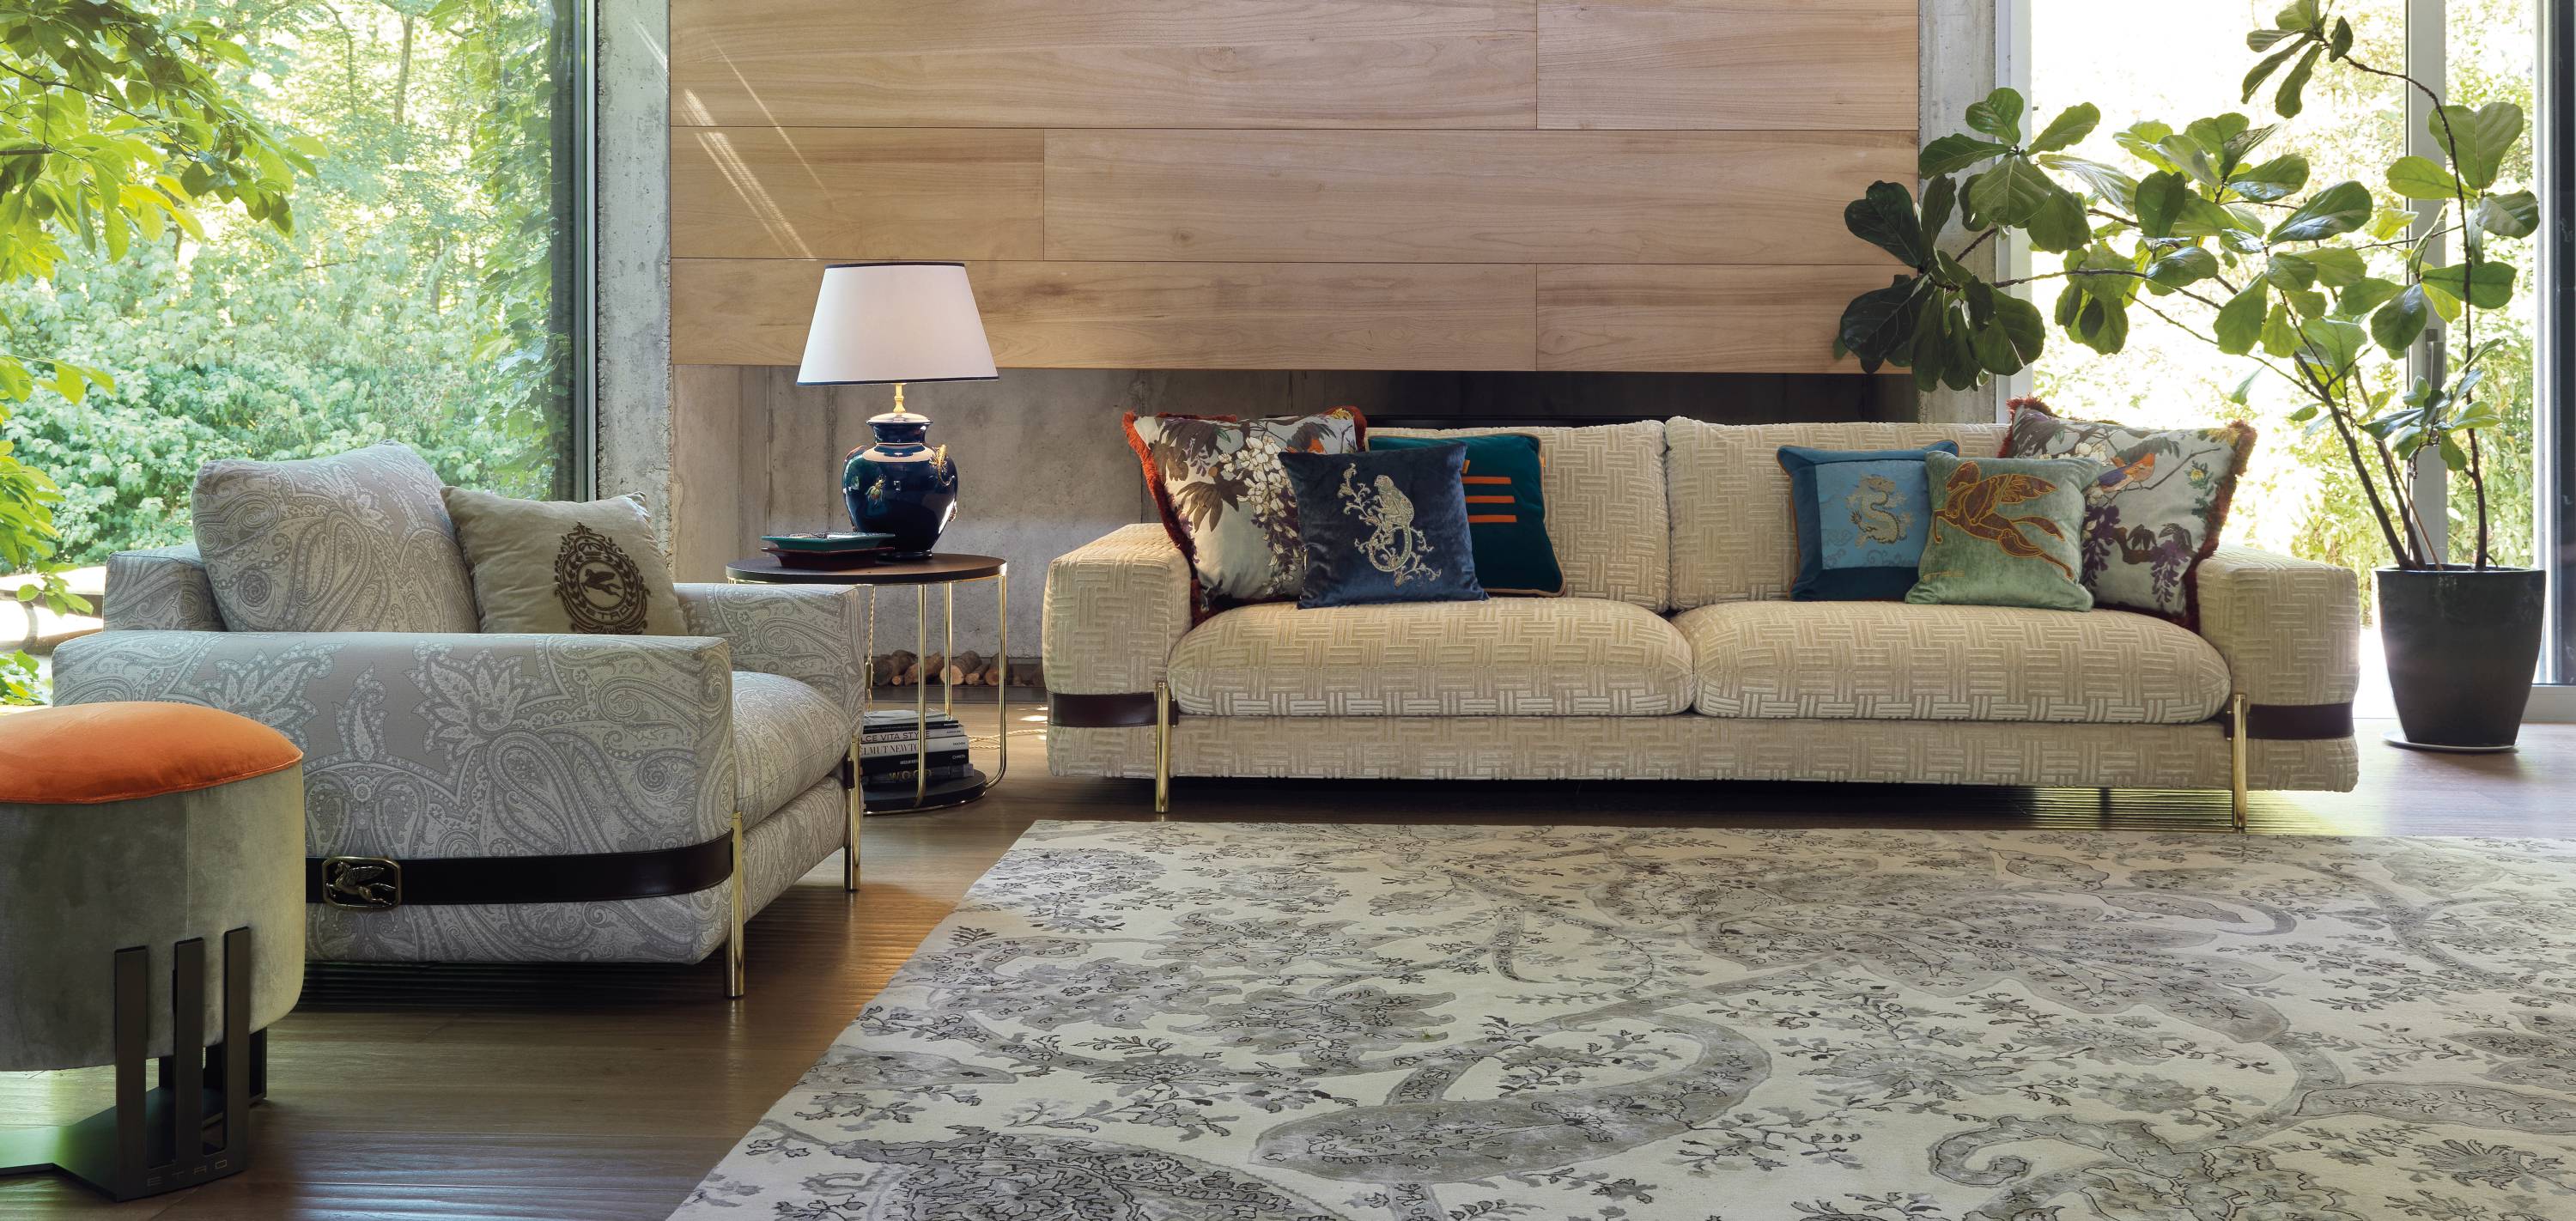 Etro Home Interiors catalogue_living_sofa_armchair